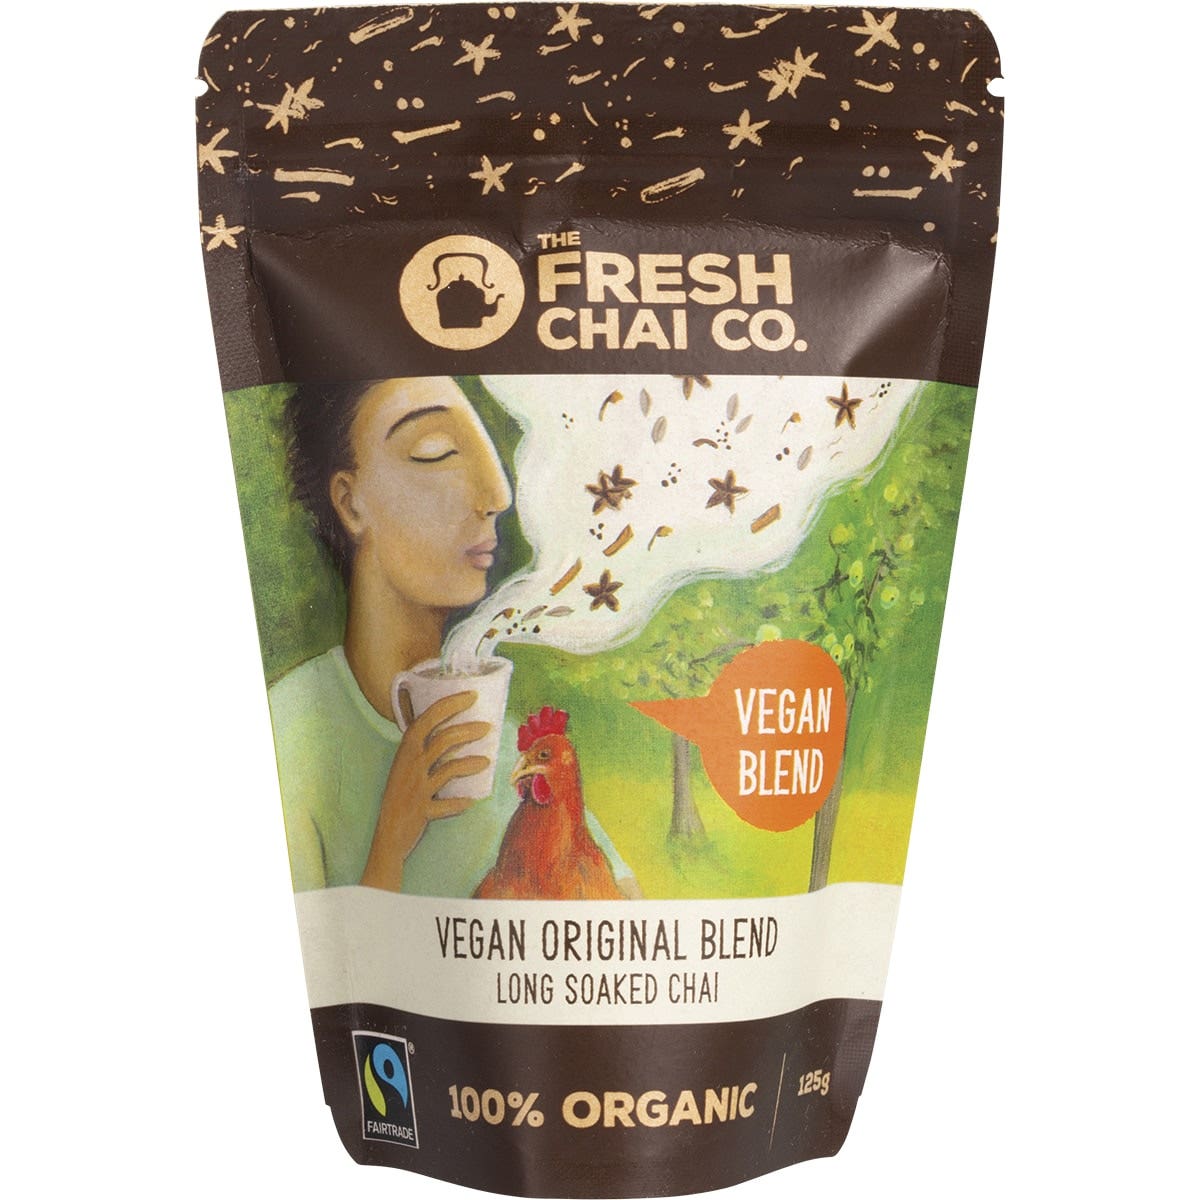 The Fresh Chai Co. Vegan Original Blend Long Soaked Chai